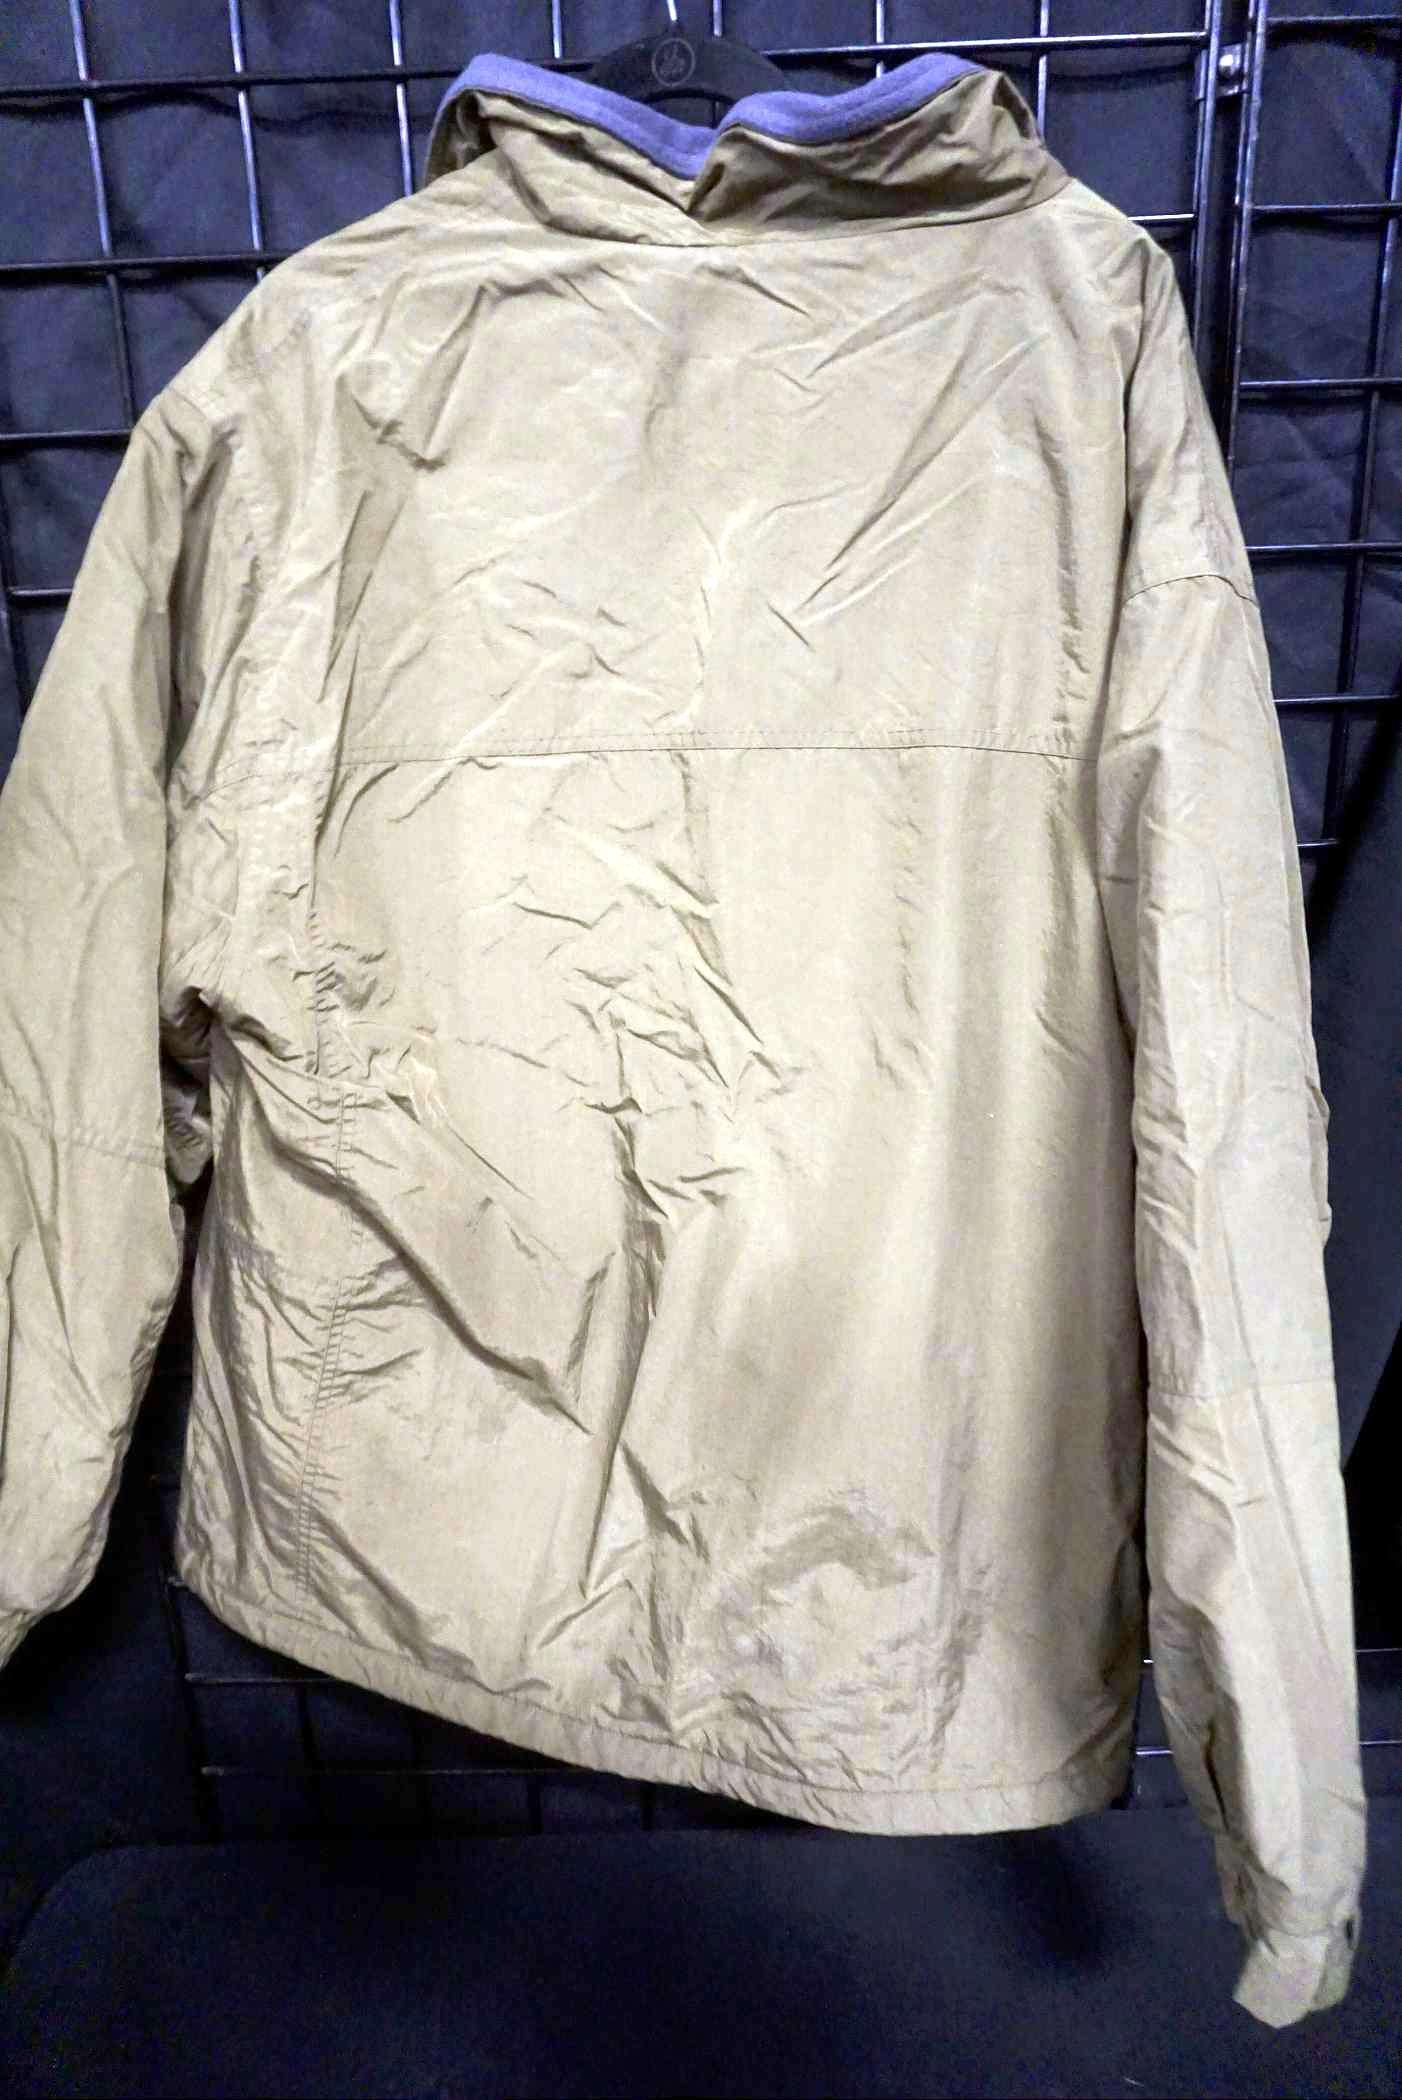 Cabela'S Jacket (Size Xl)